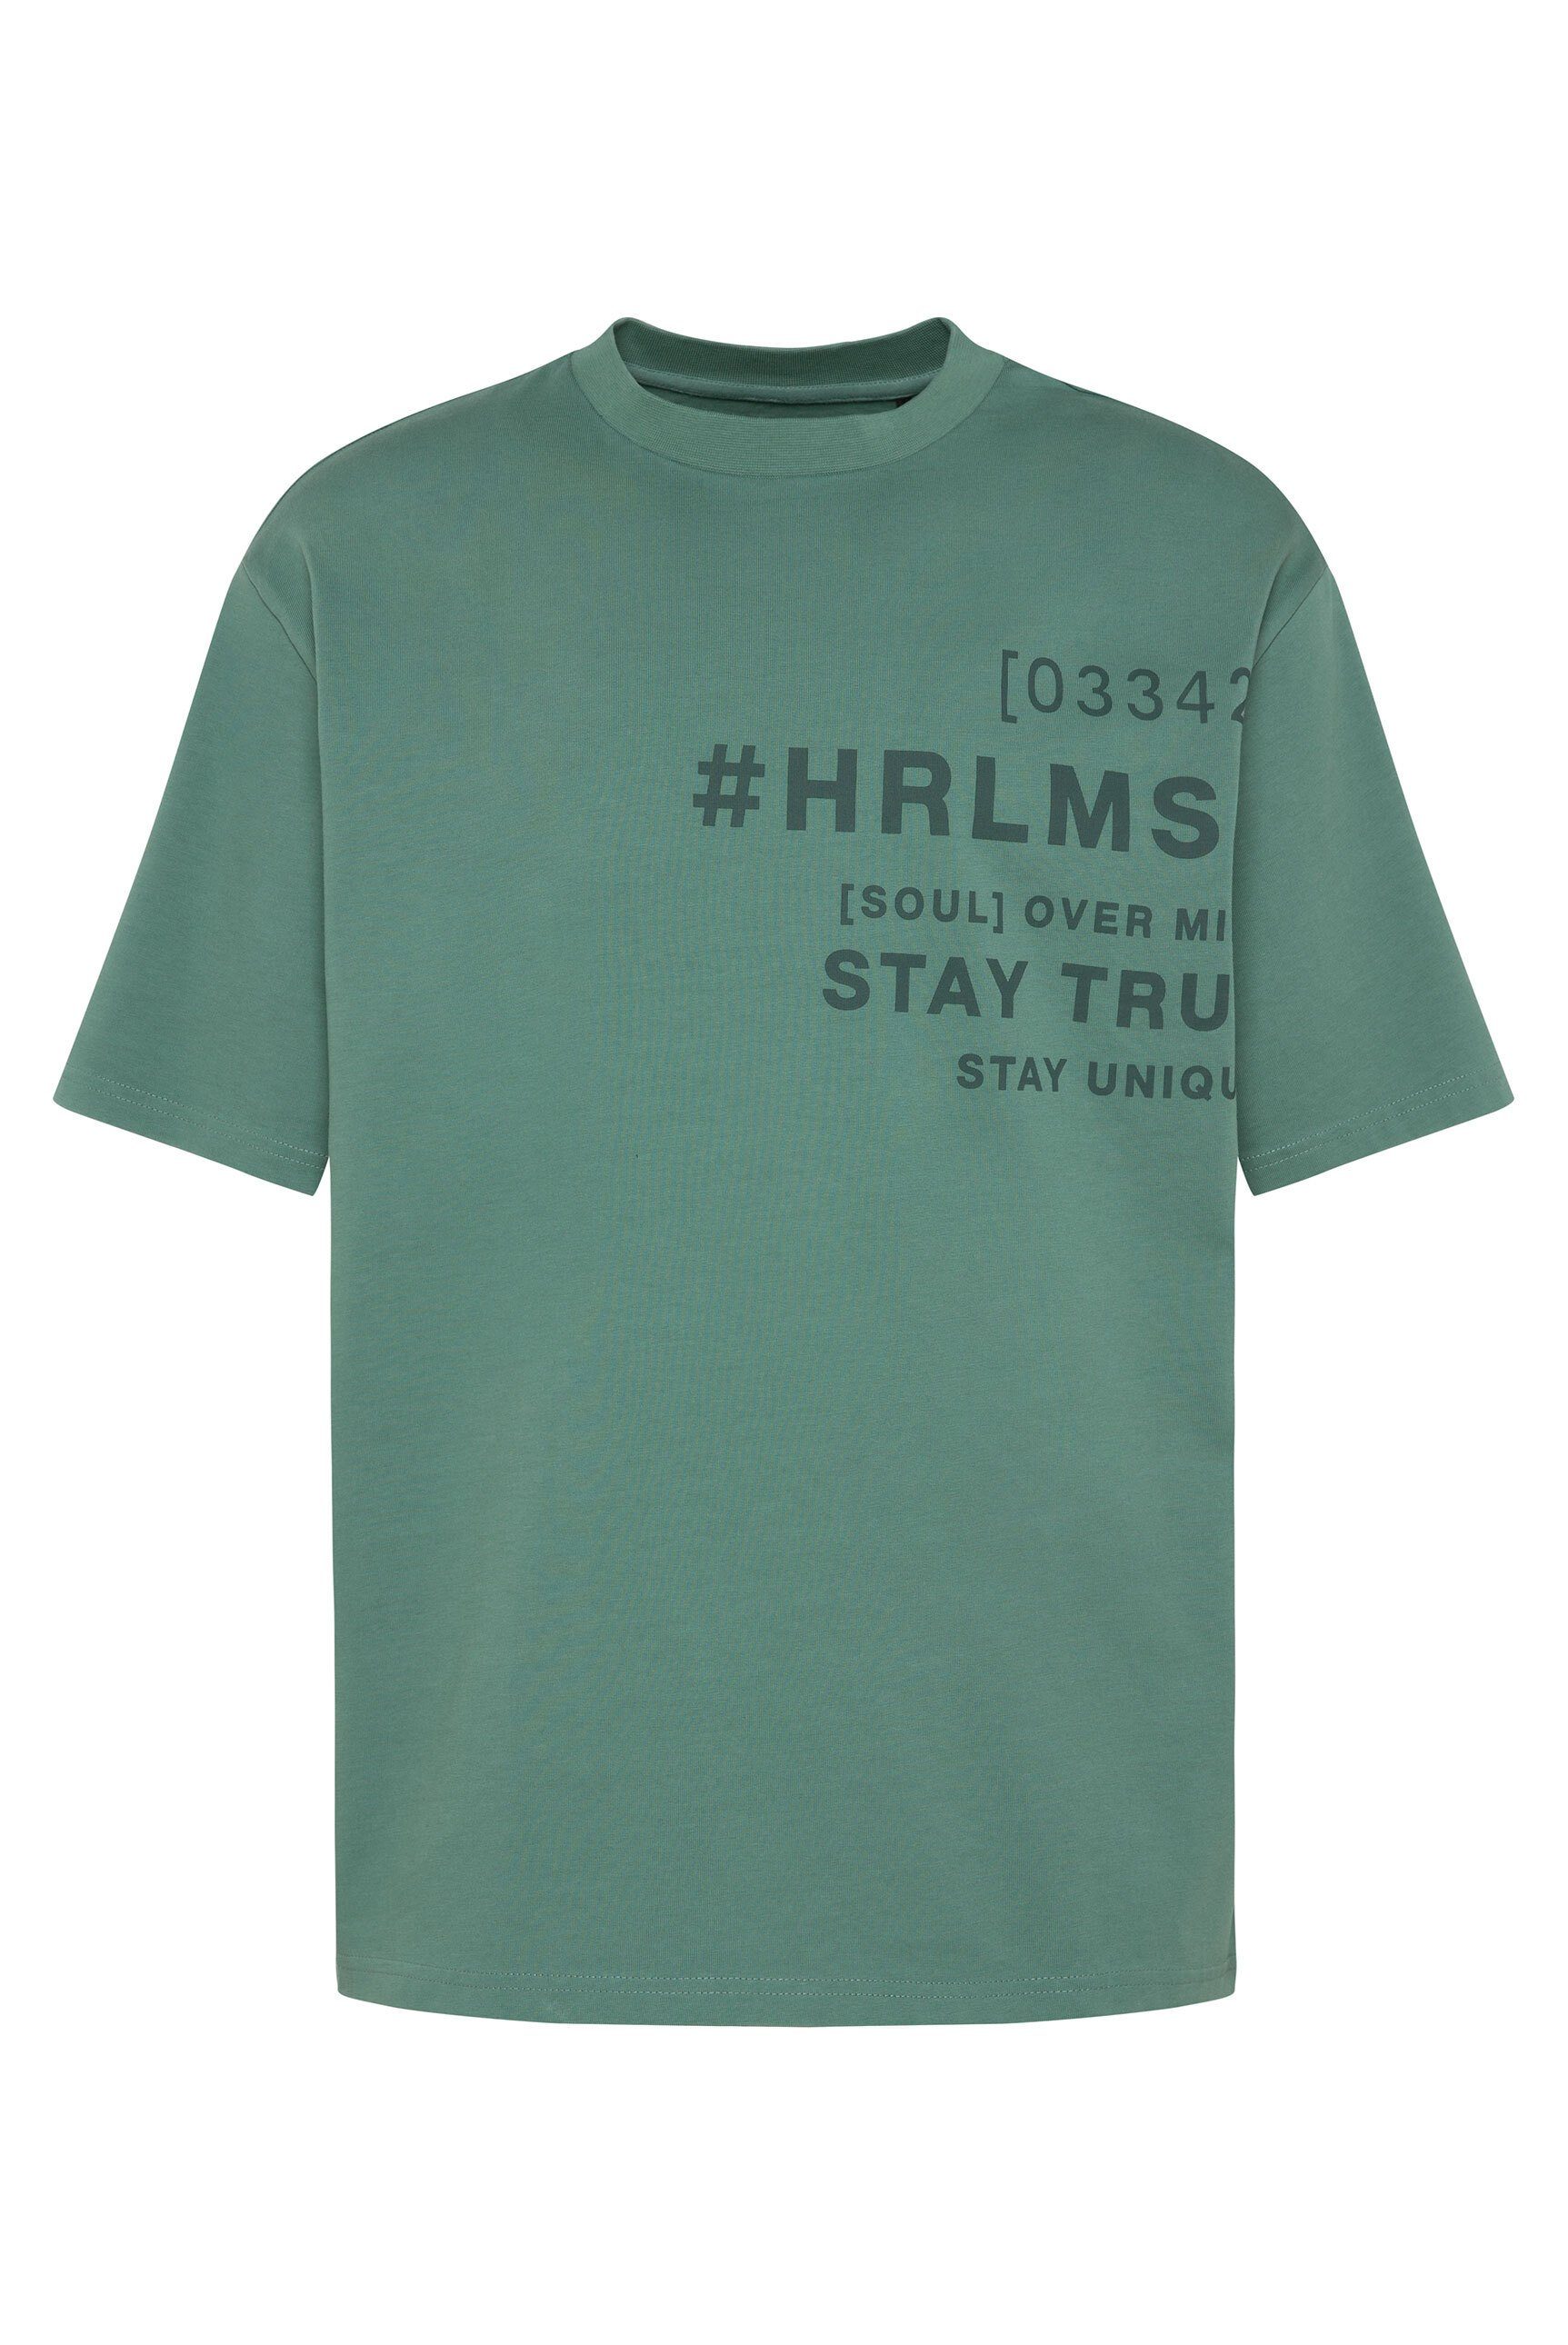 Harlem Soul Rundhalsshirt mit Logodruck, GOTS zertifiziertes T-Shirt,  organic CU 1018028 | T-Shirts